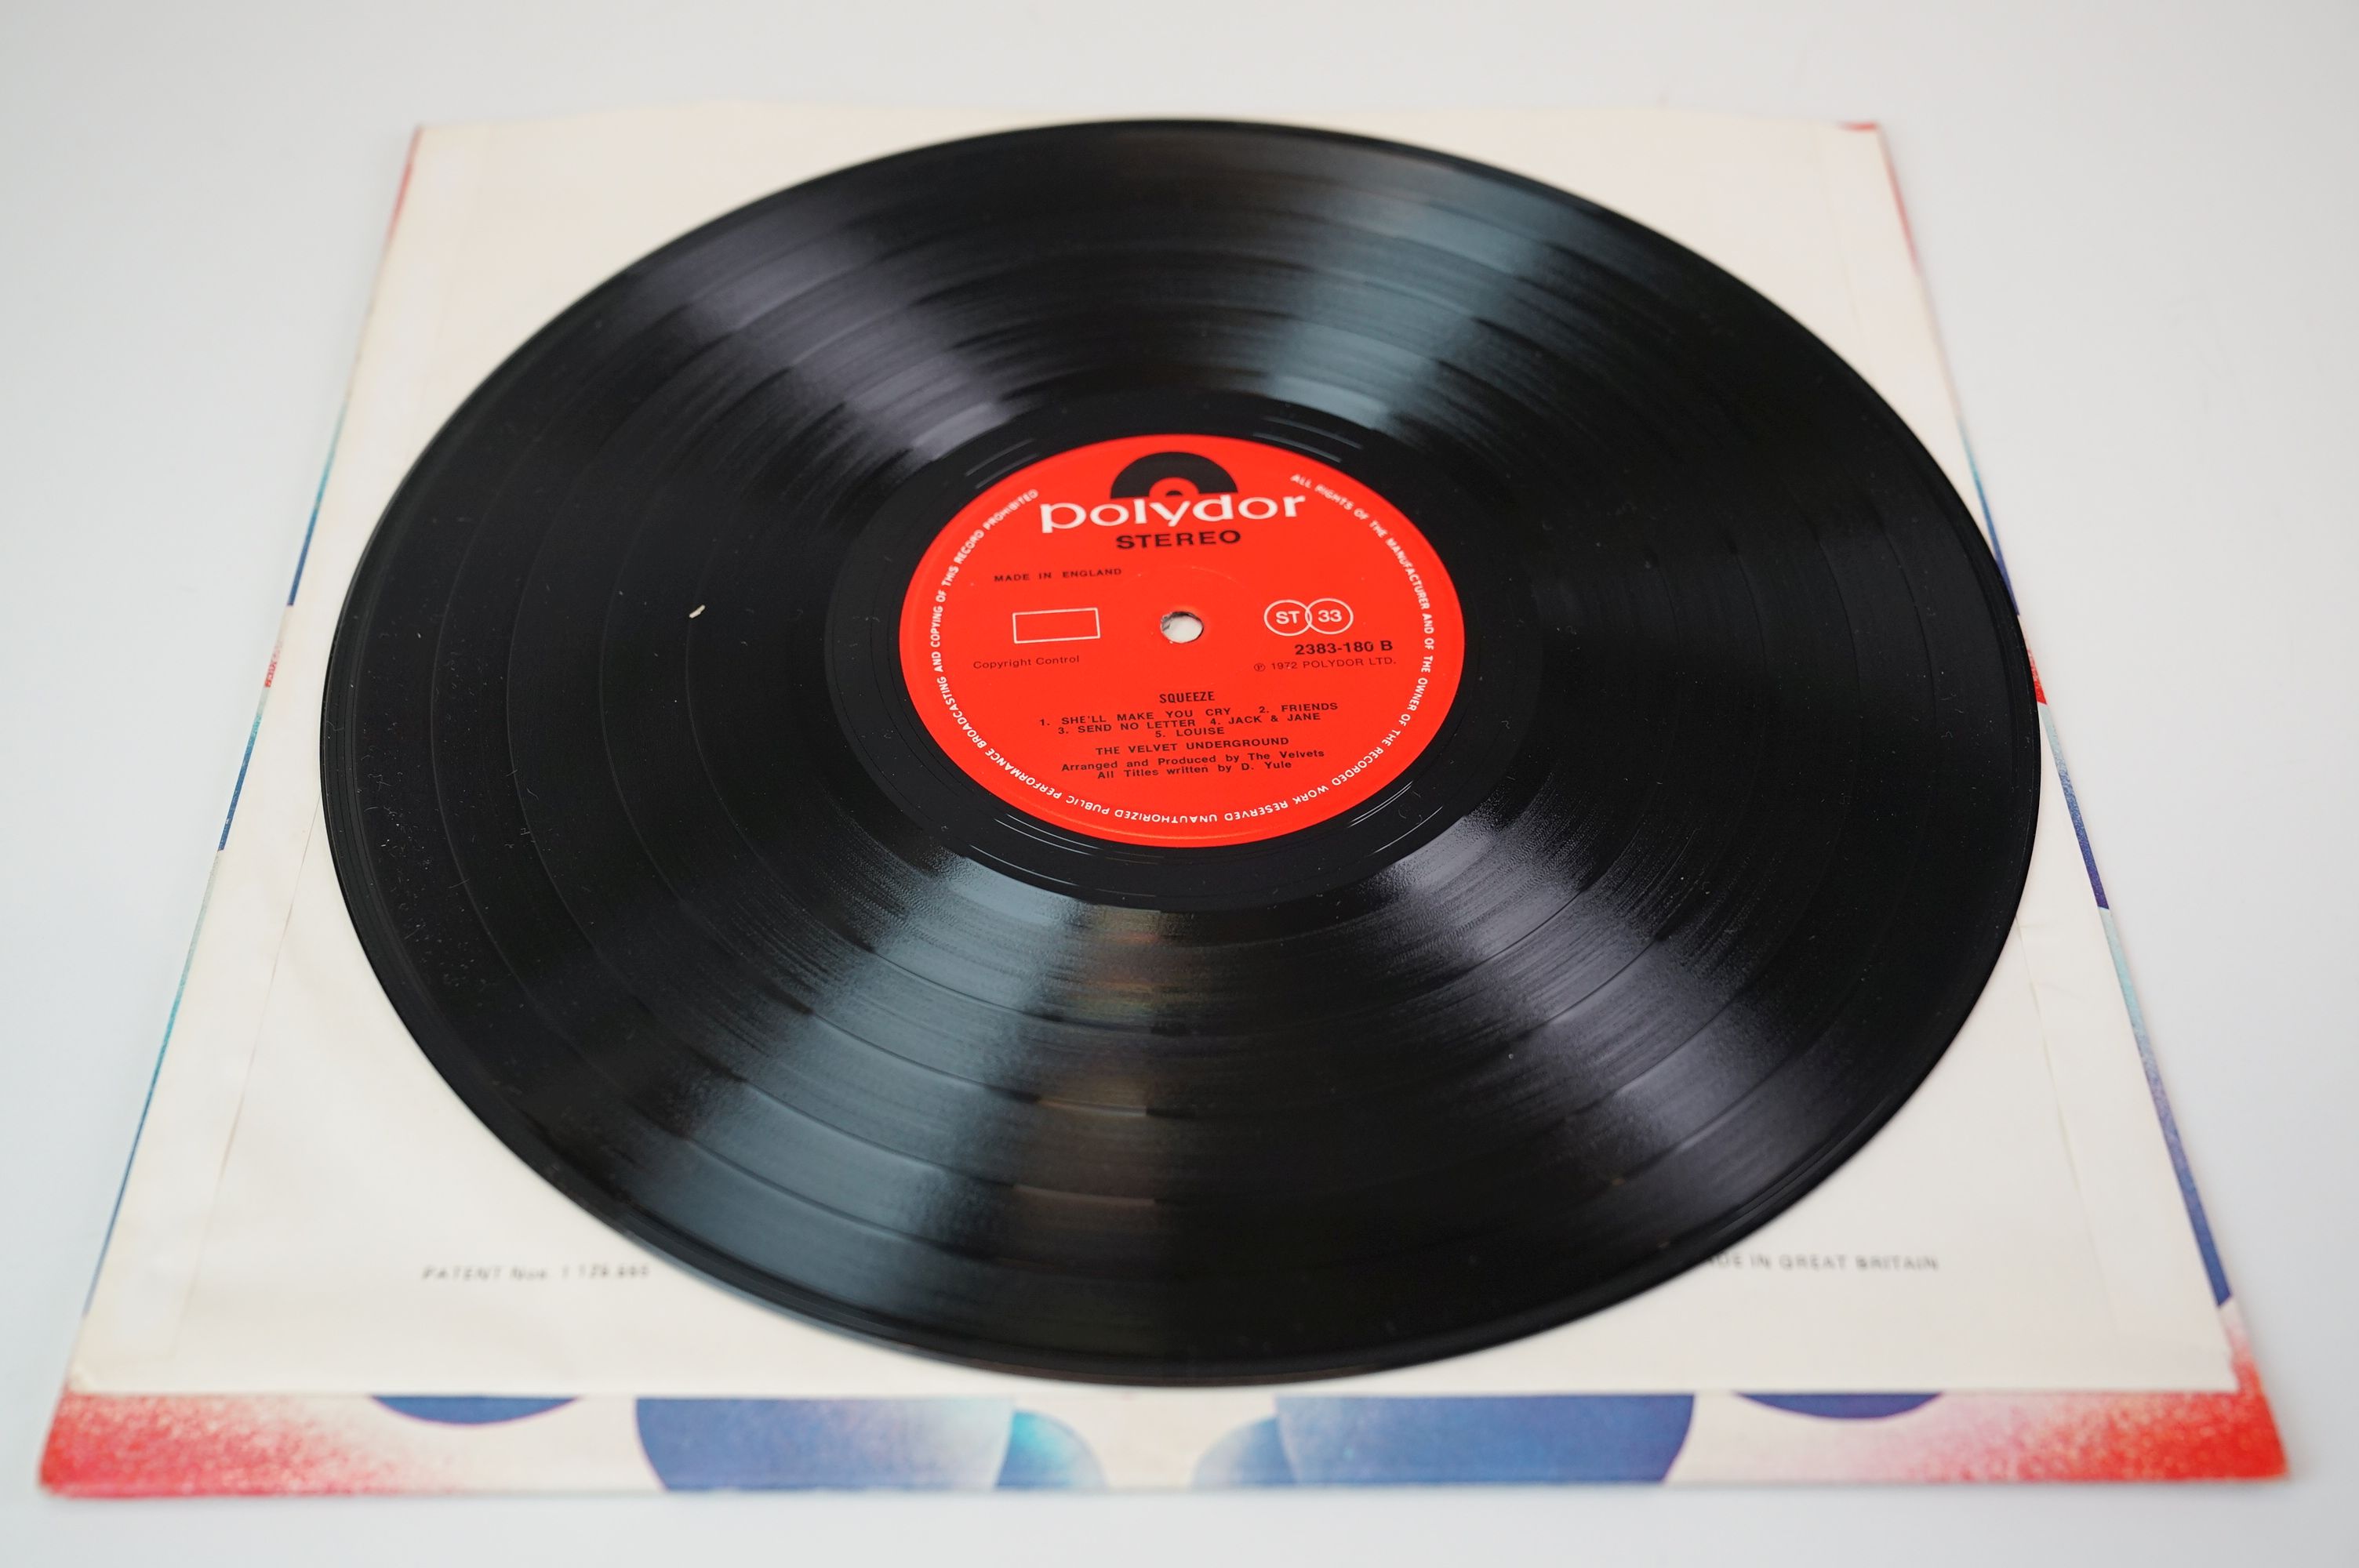 Vinyl - Four Velvet Underground LPs to include White Light/White Heat MGM 2353024, Loaded ( - Image 28 of 31